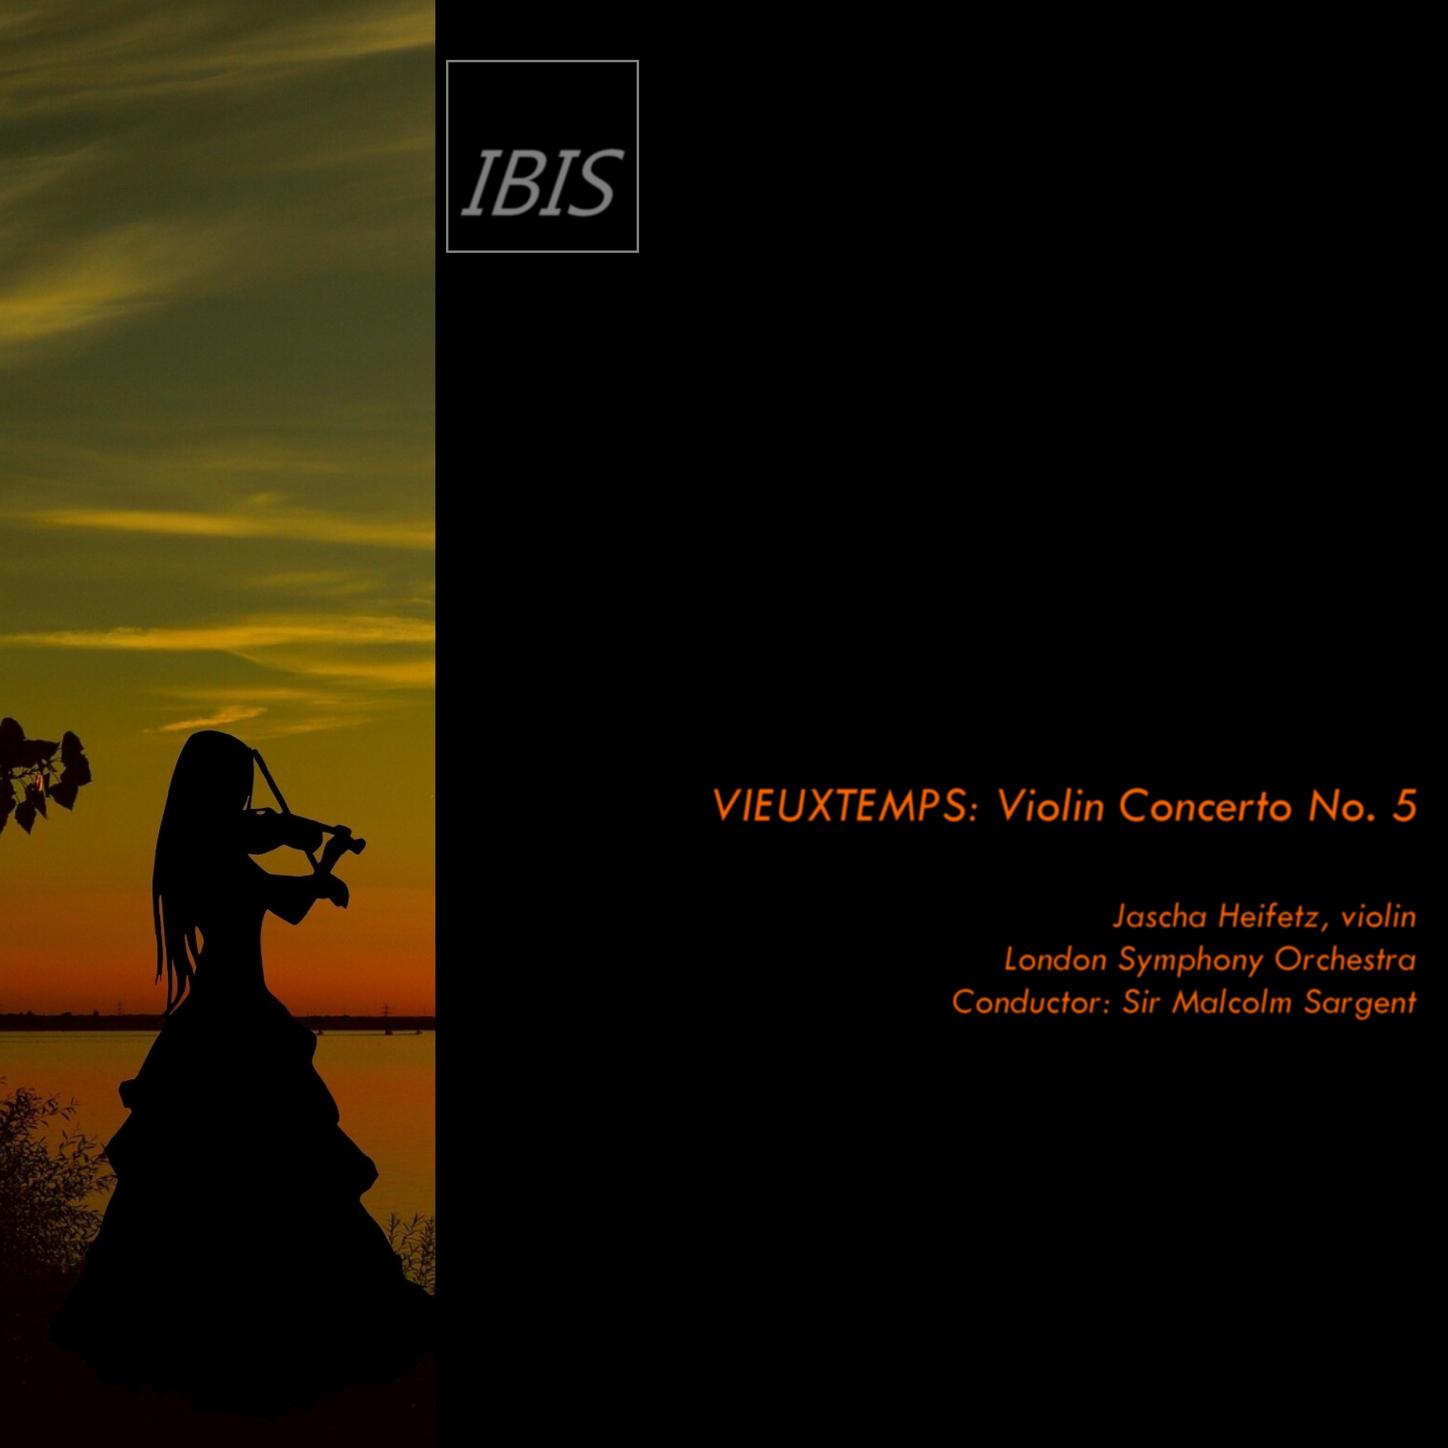 Vieuxtemps: Violin Concerto No.5, Op. 37: I. Allegro non troppo - Moderato